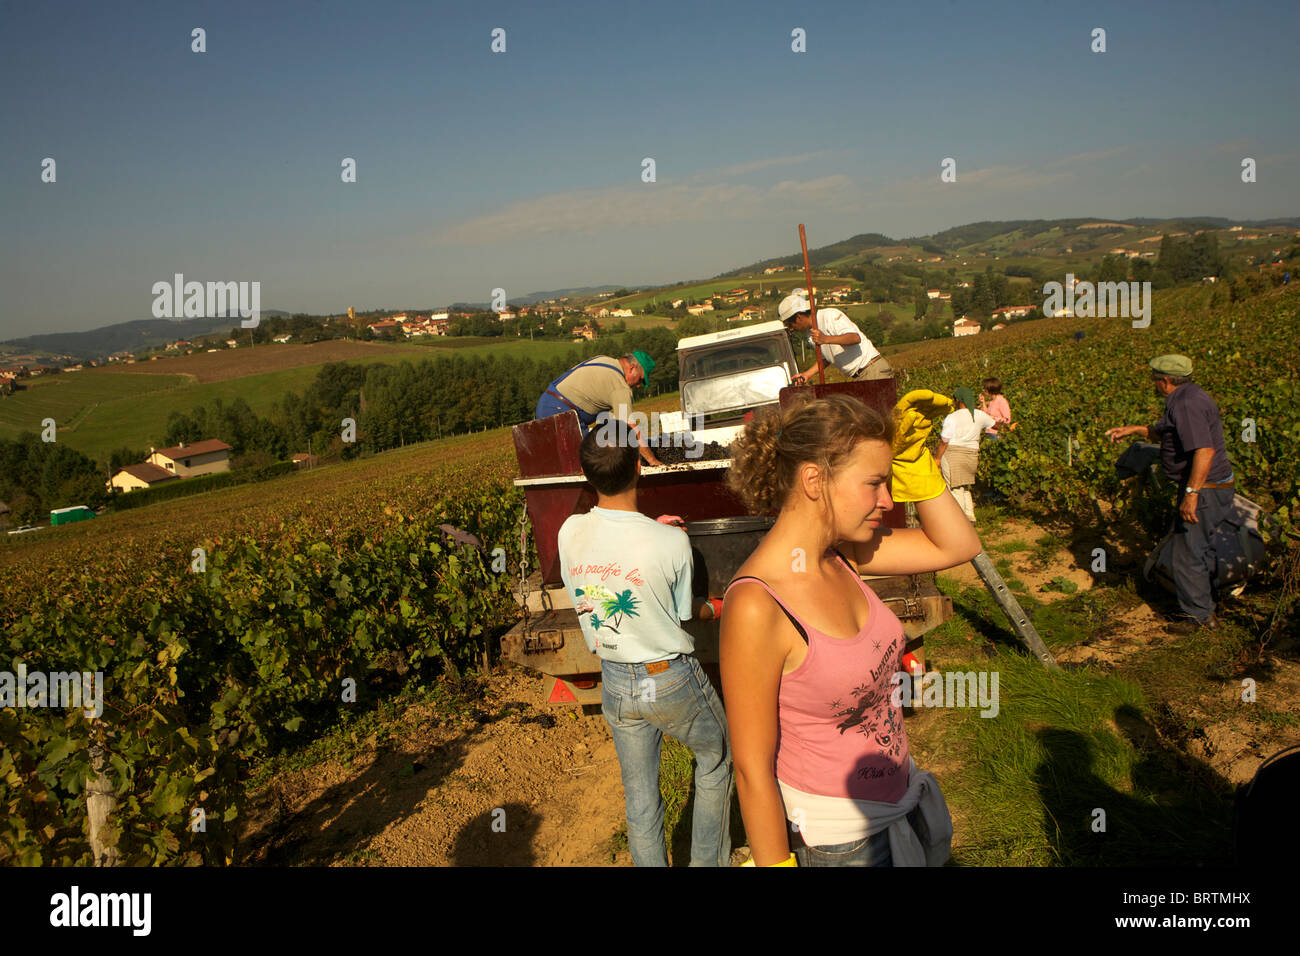 Domaine du Vissoux, Beaujolais raccolto di uve nei campi del vino Beaujolais foto di Owen Franken Foto Stock